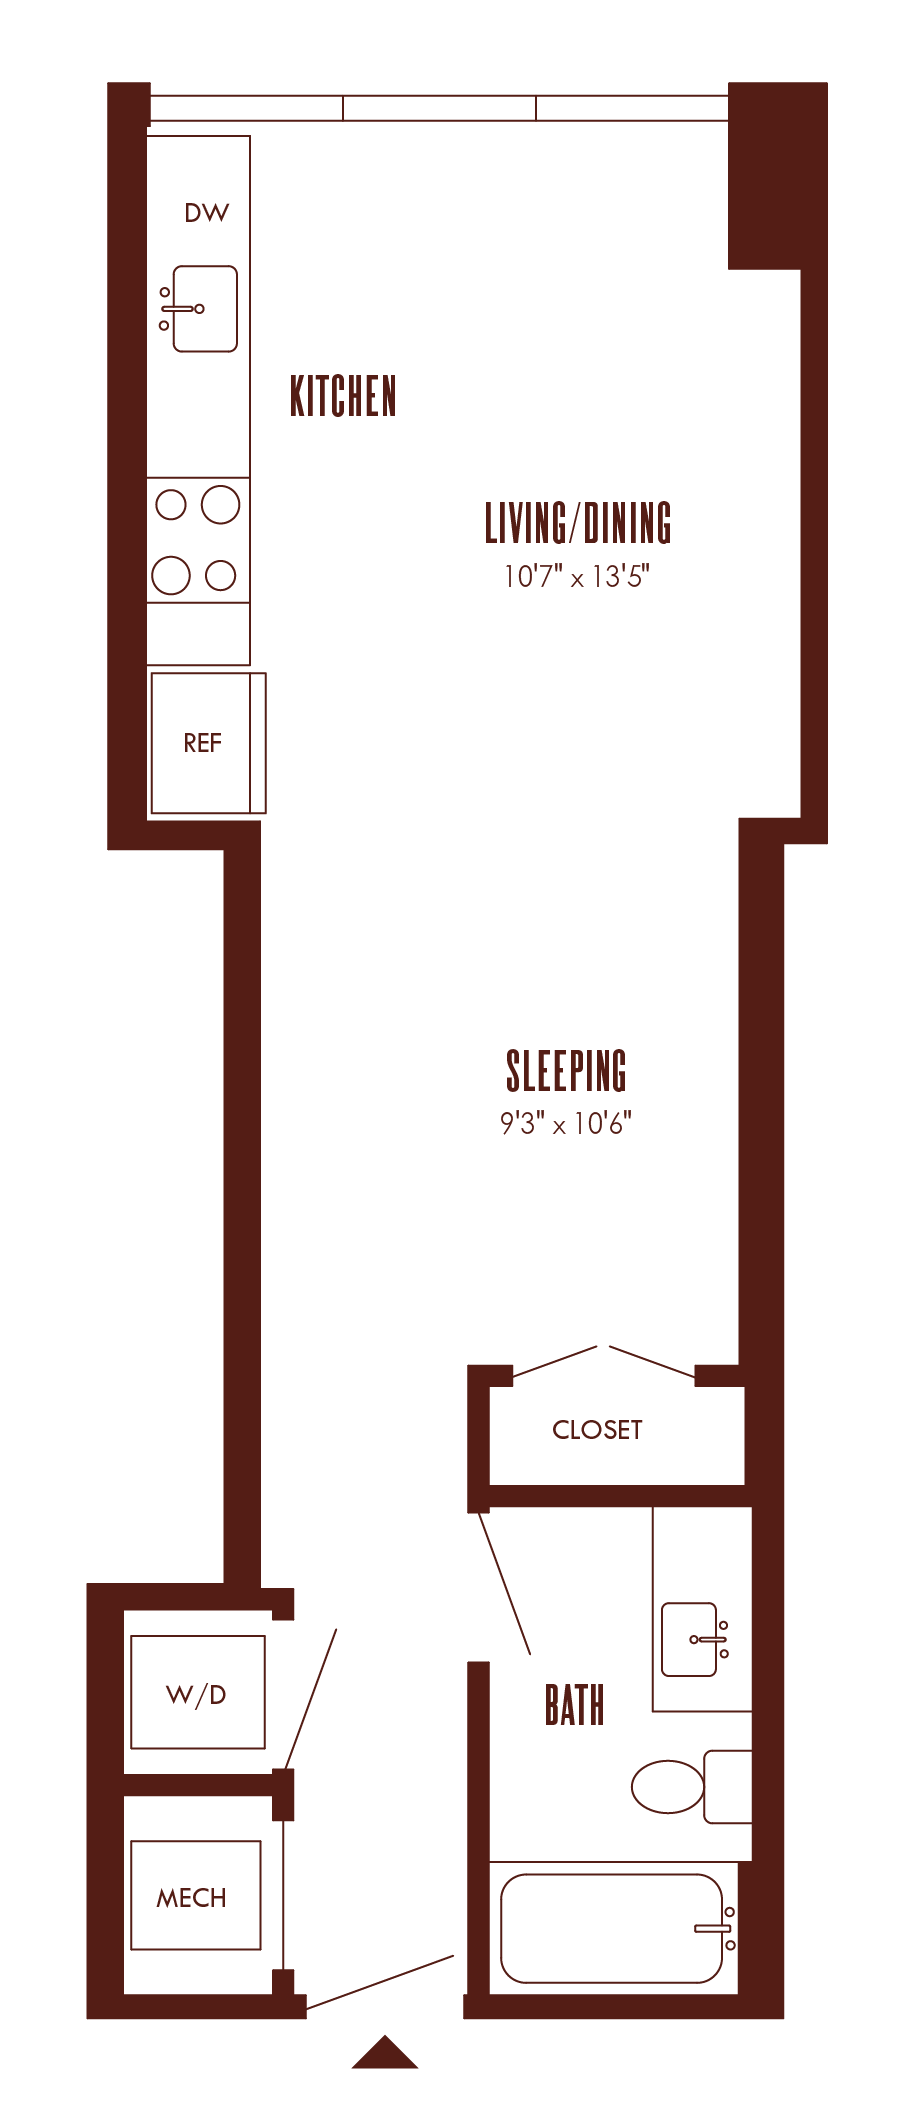 Floor Plan Image of Apartment Apt 28J